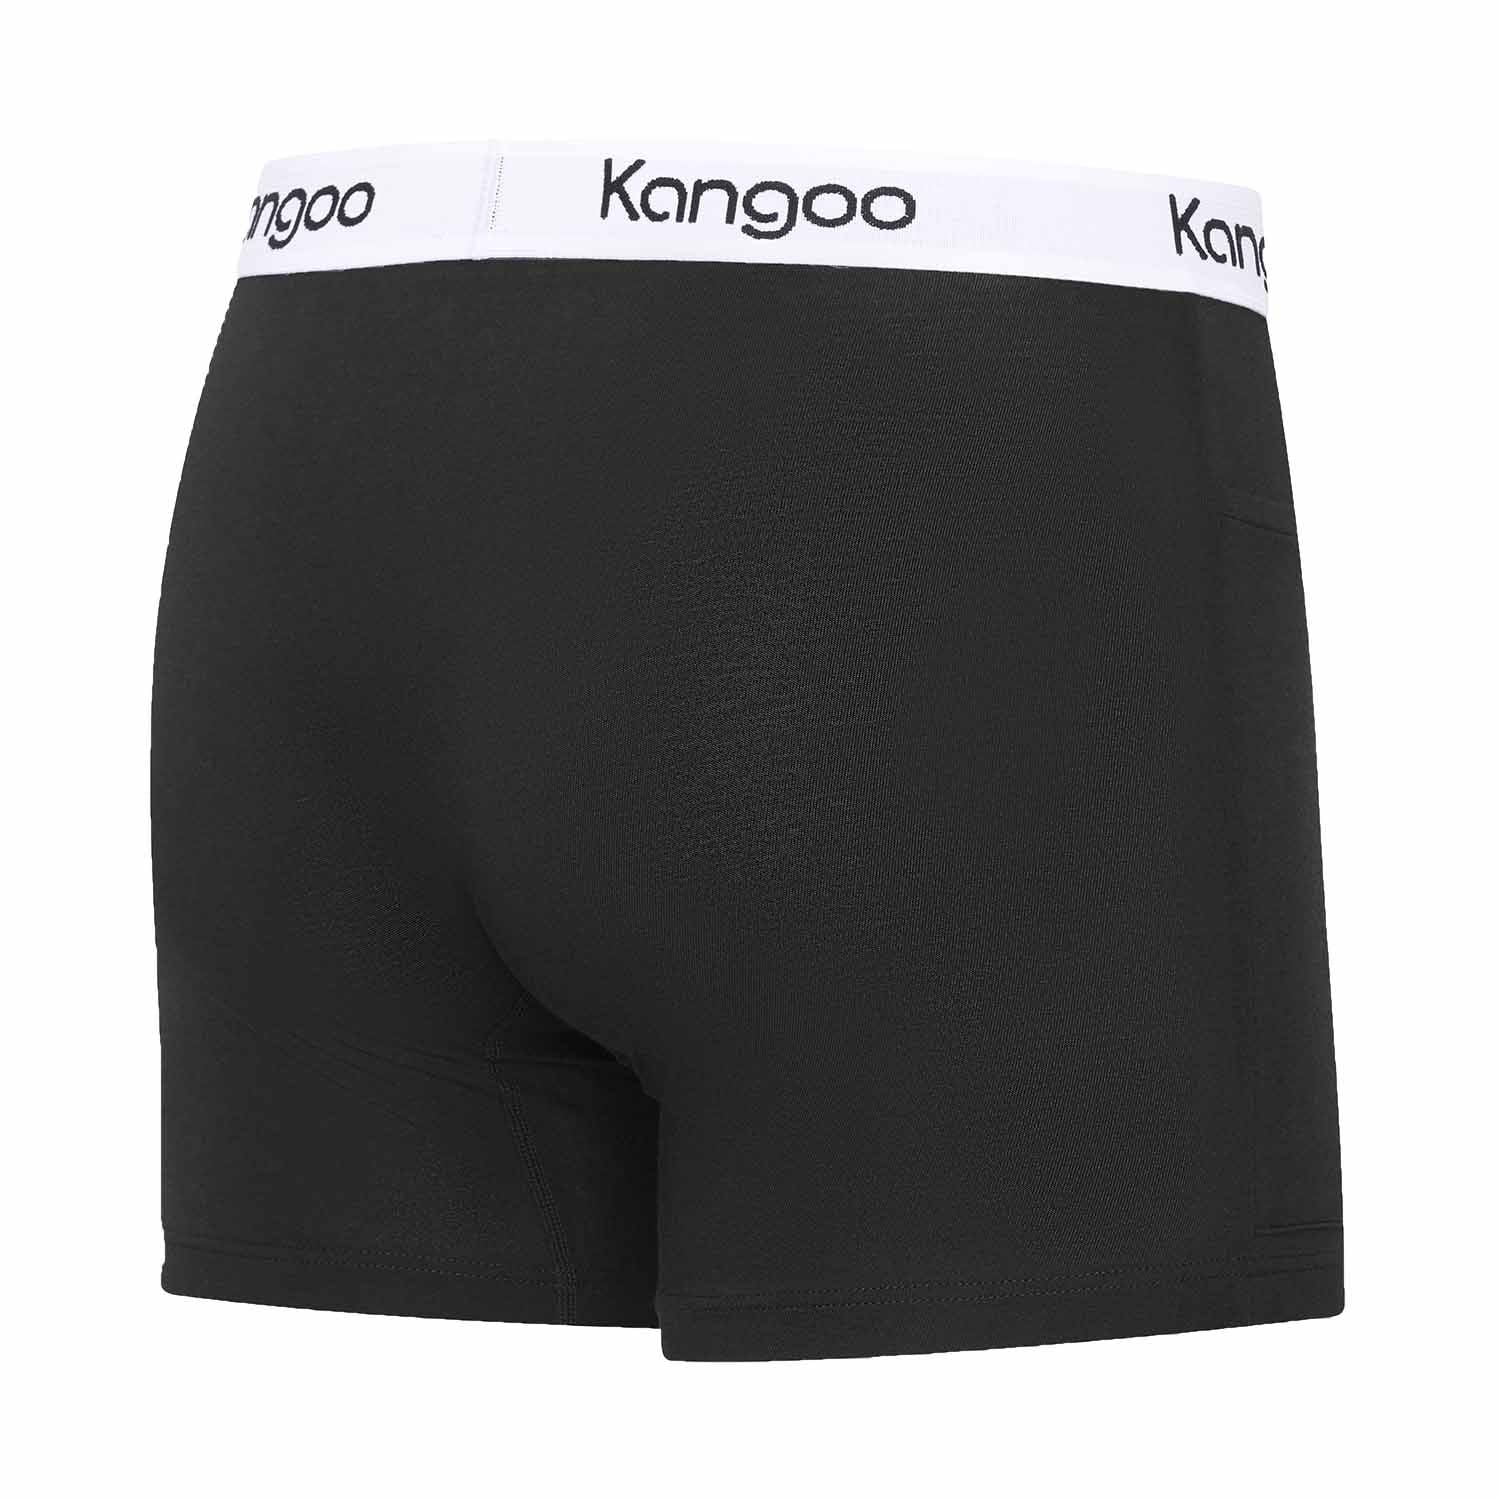 Kangoo | Black & White | 3-pack